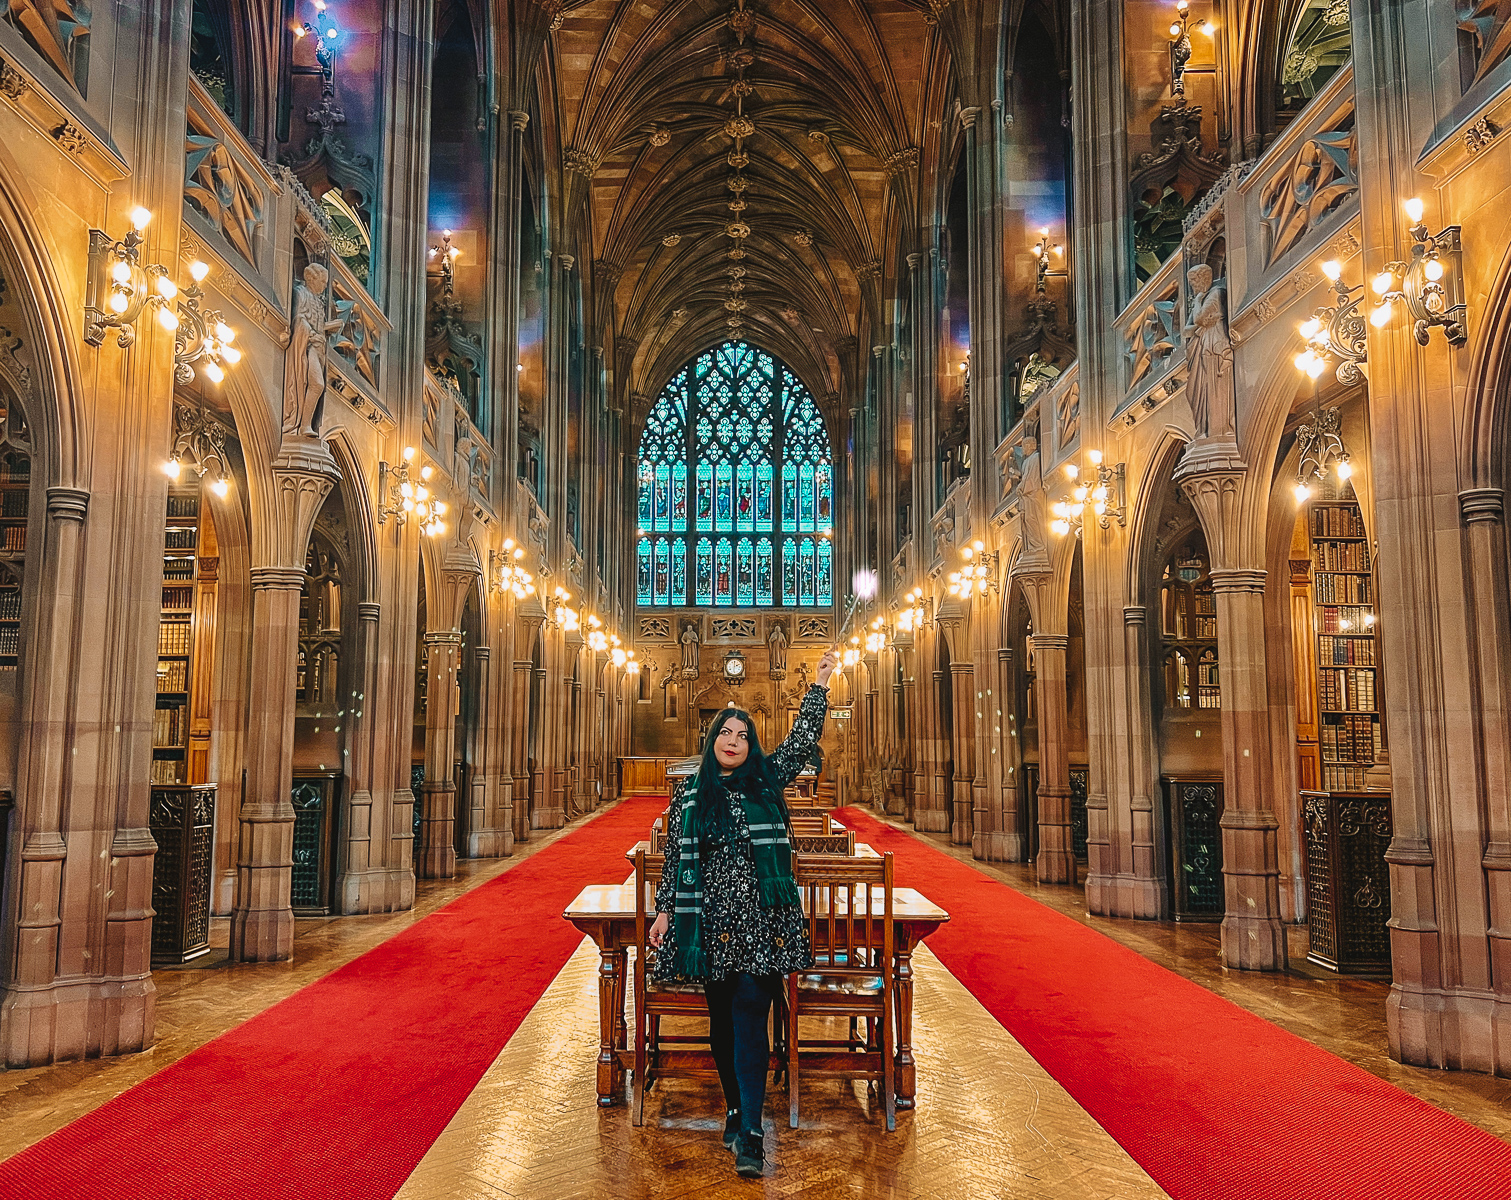 John Rylands Library Harry Potter